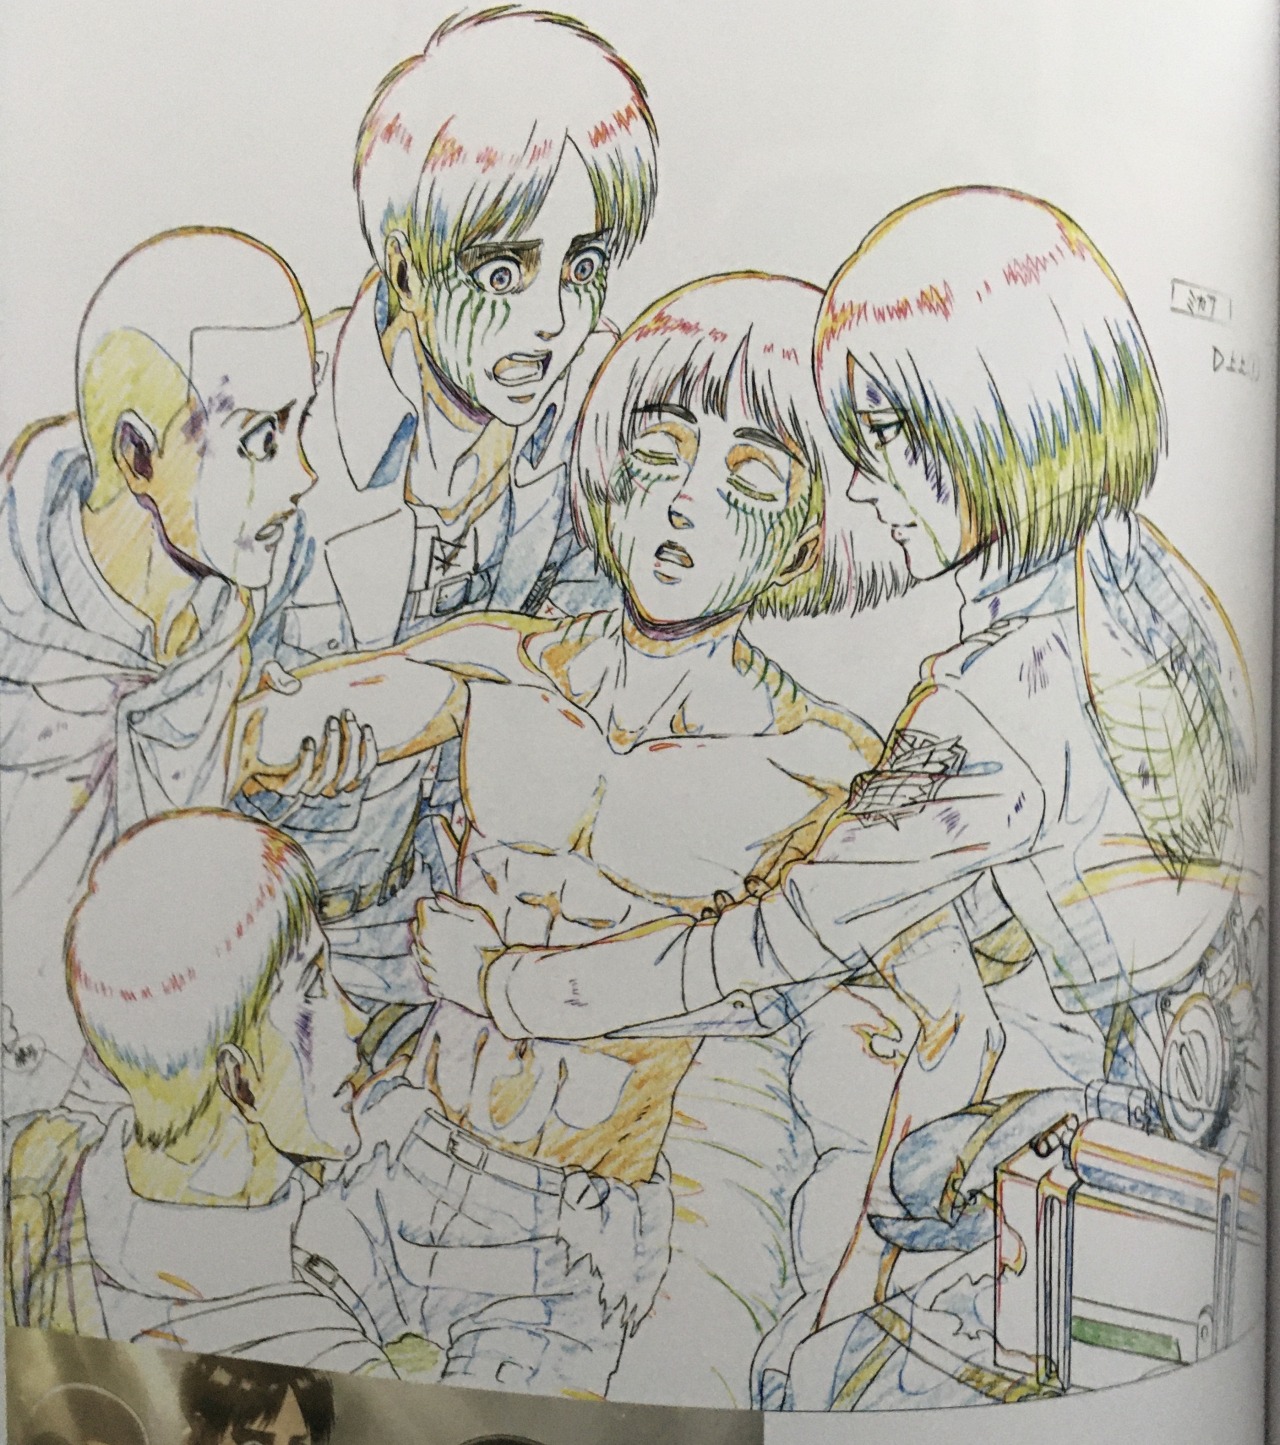 WIT STUDIO Shingeki no Kyojin Attack on Titan Season3 Line Art Illustration  Book